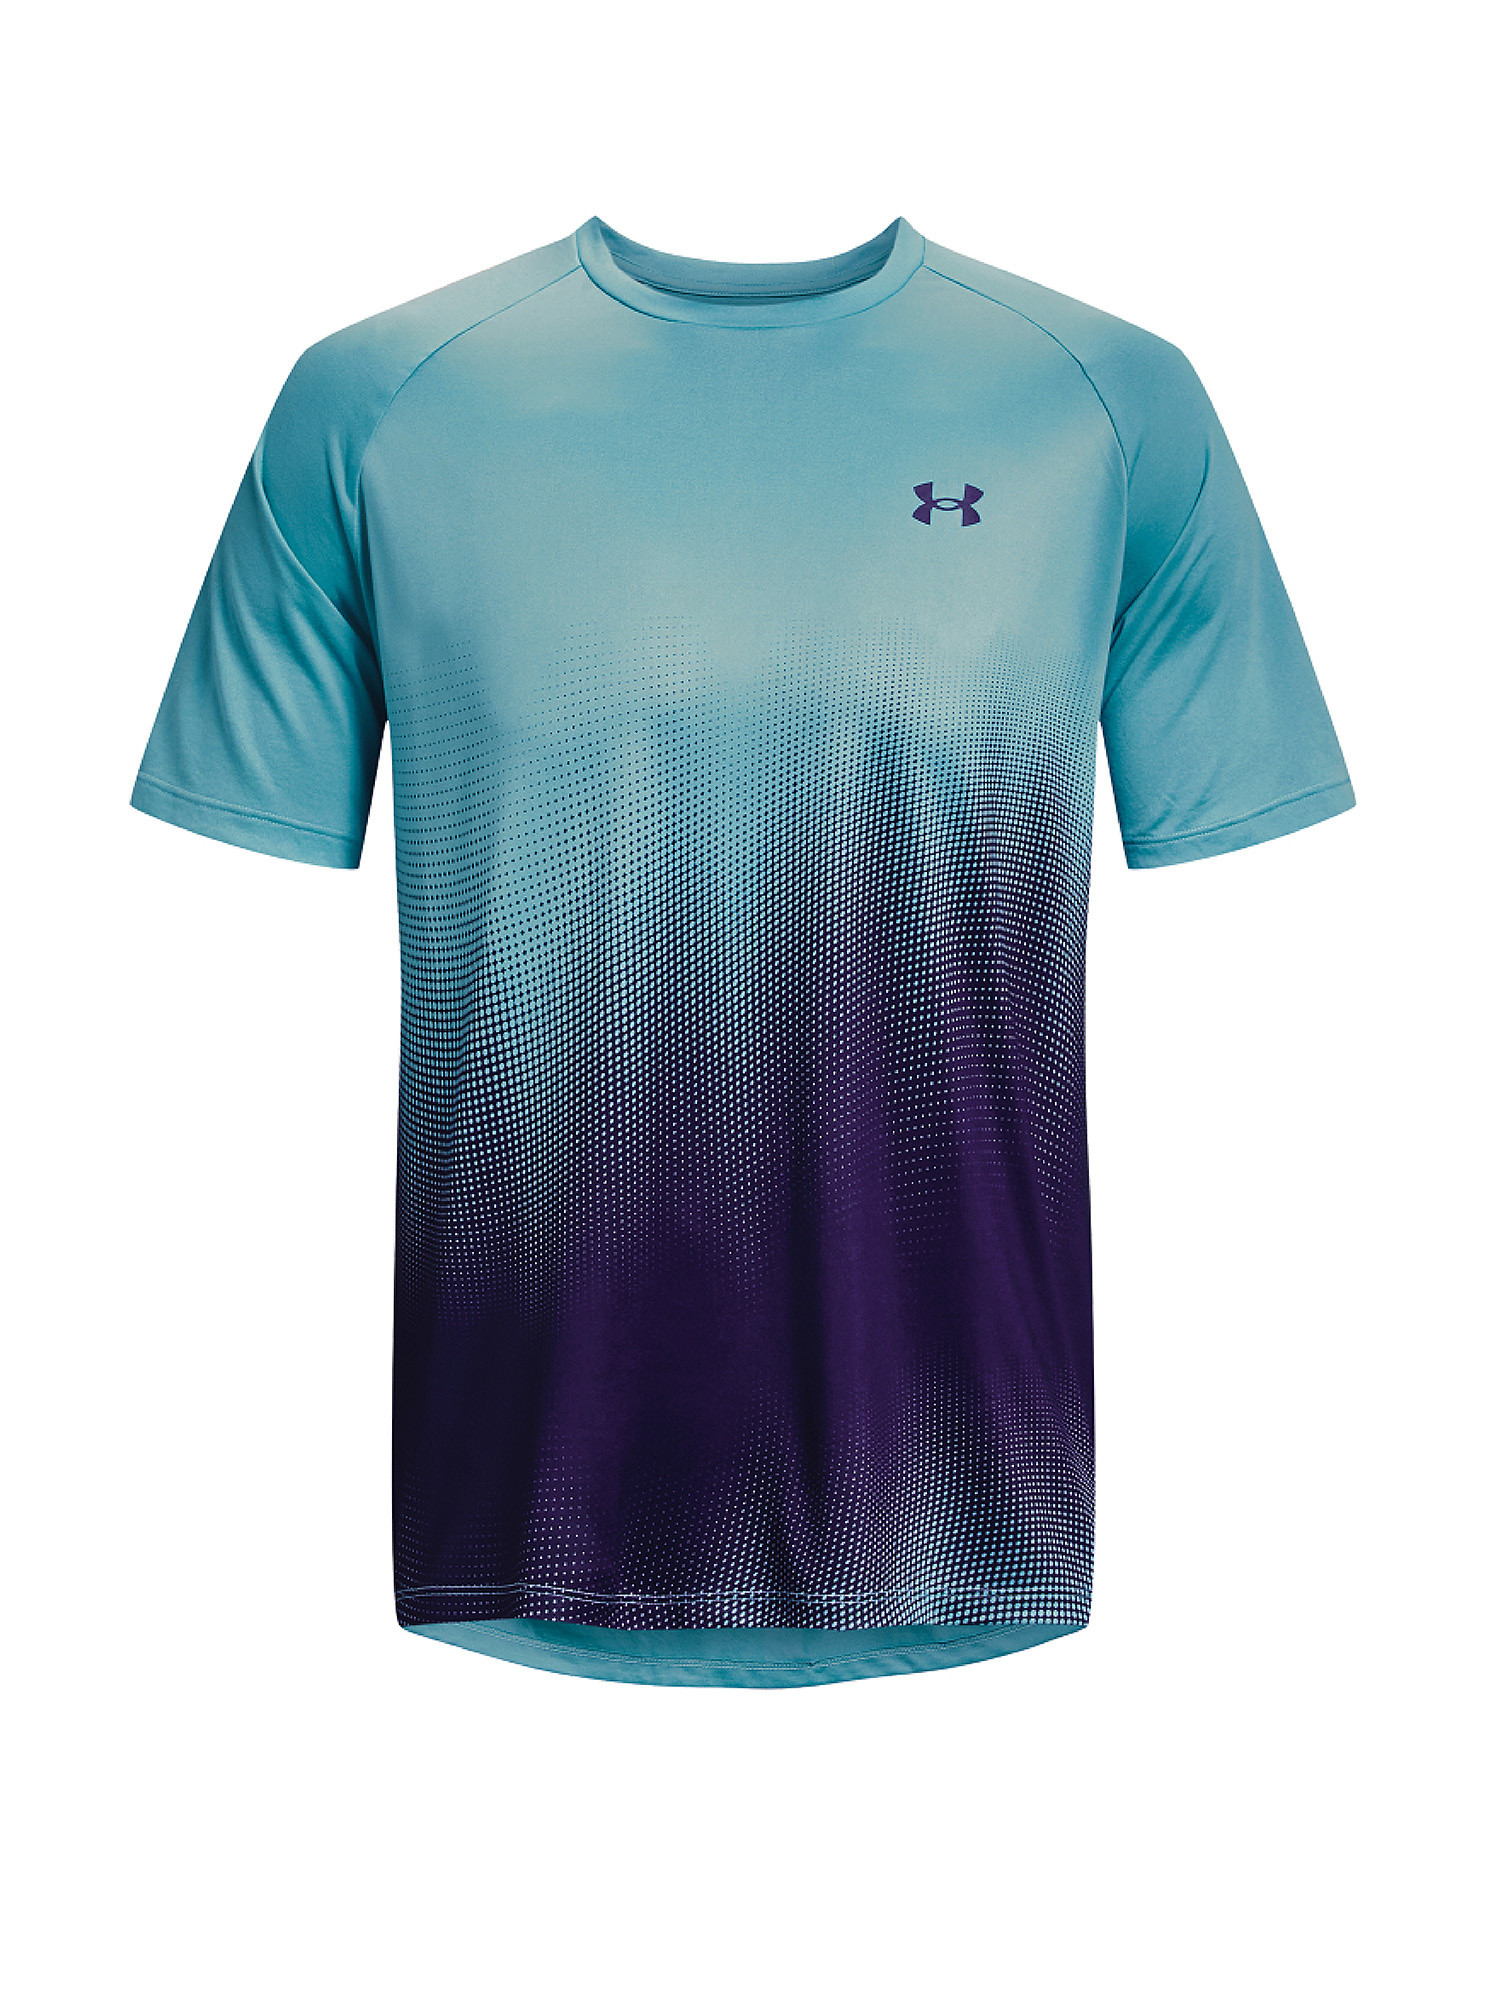 Under Armour - UA Tech™ Fade Short Sleeve T-Shirt, Light Blue, large image number 0